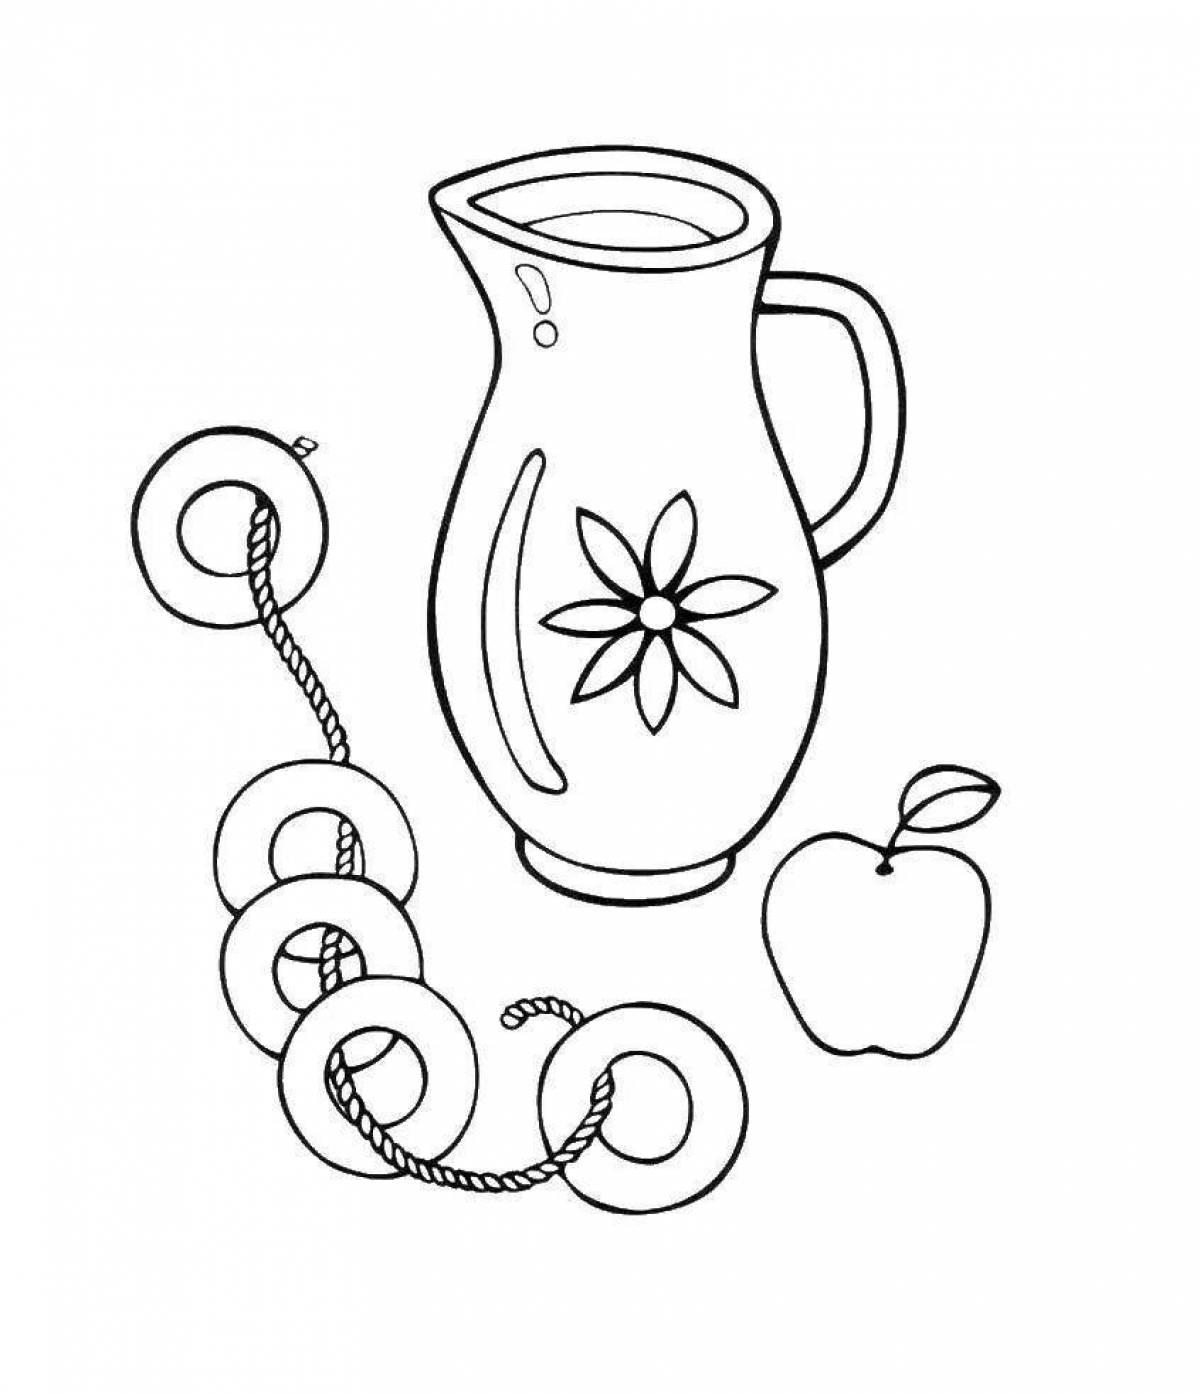 Charming jar drawing page for kindergarten